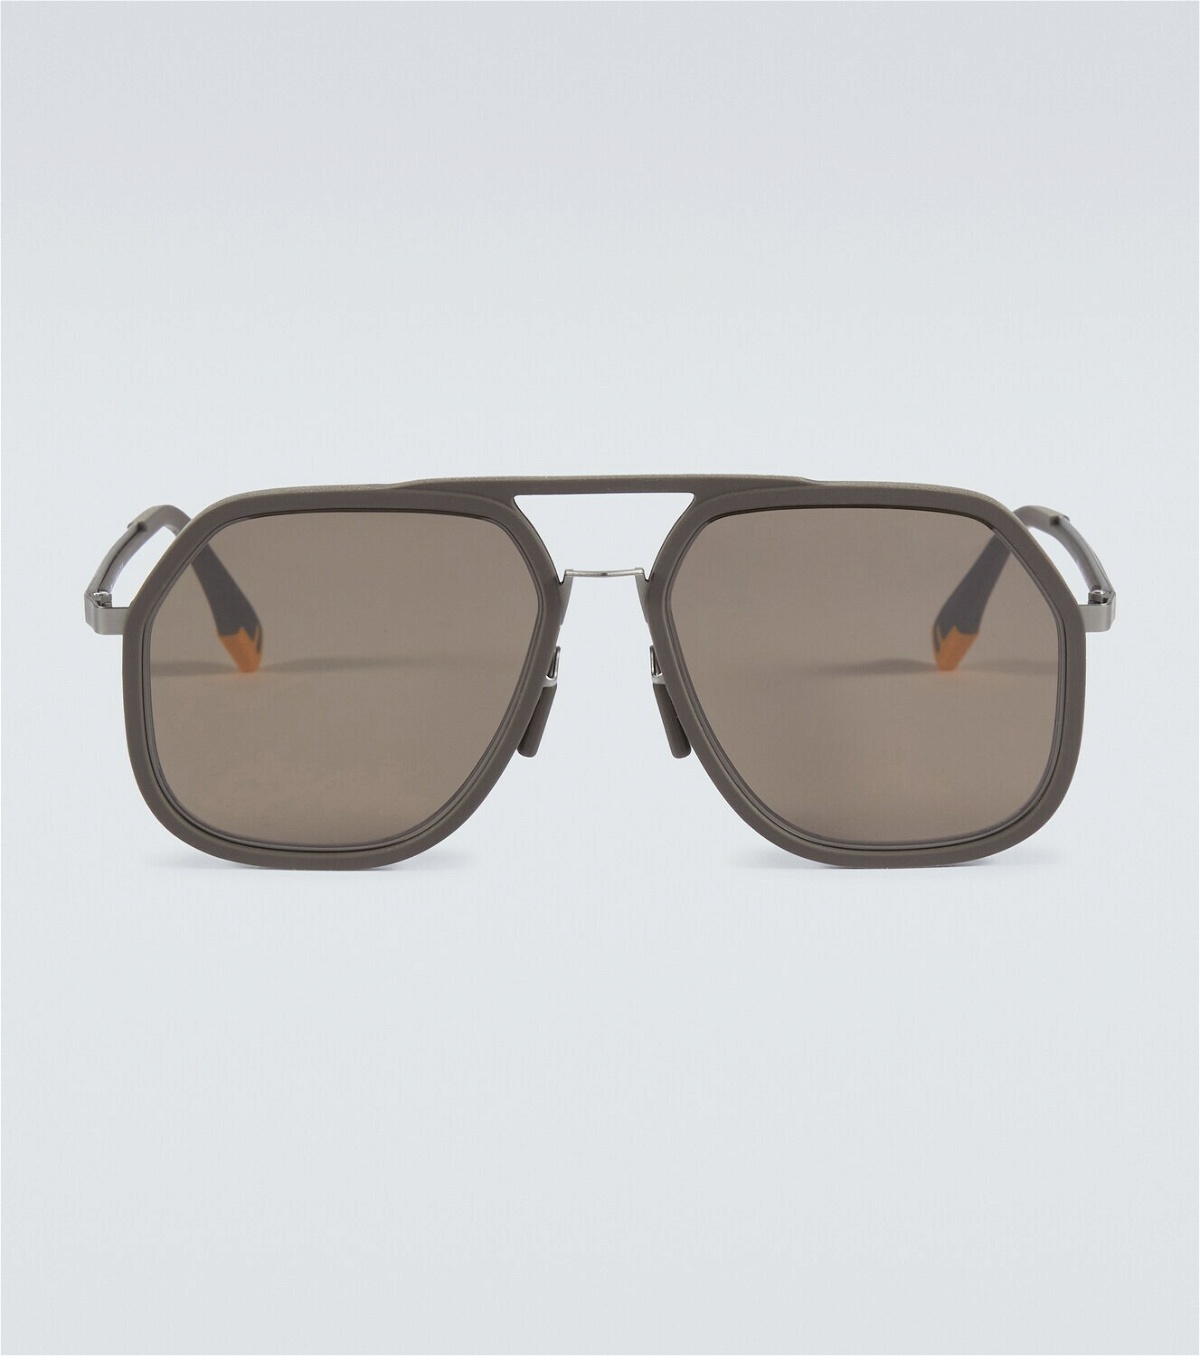 Fendi Men's Fendigraphy Geometric Sunglasses - Grey Brown One-Size